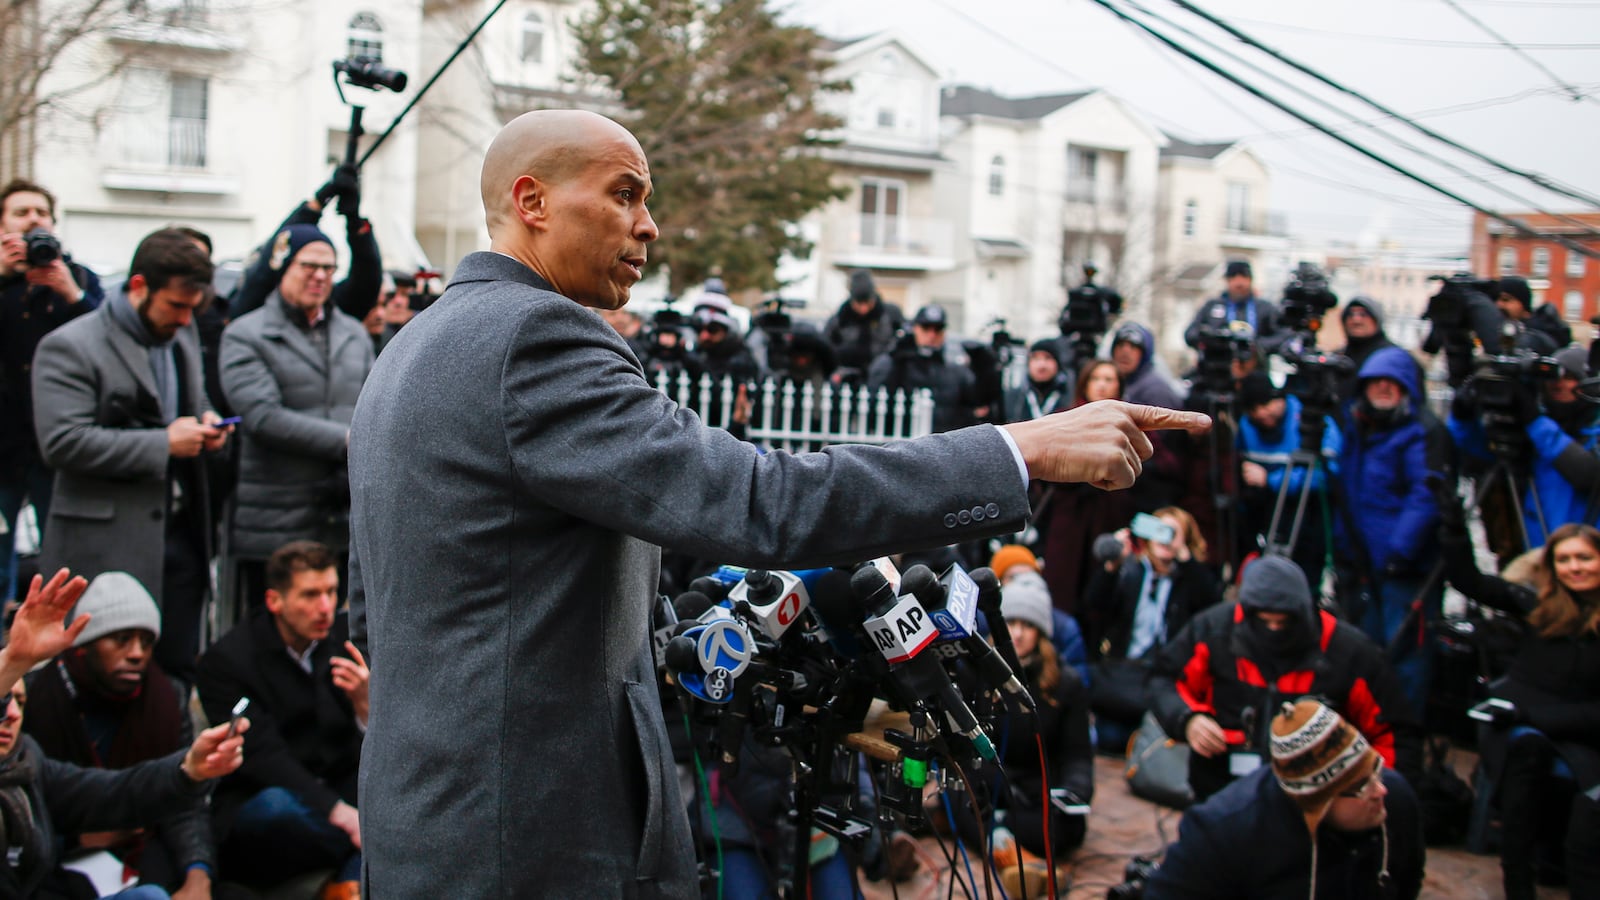 Sen. Cory Booker announced his presidential bid outside his home in Newark, NJ last week.